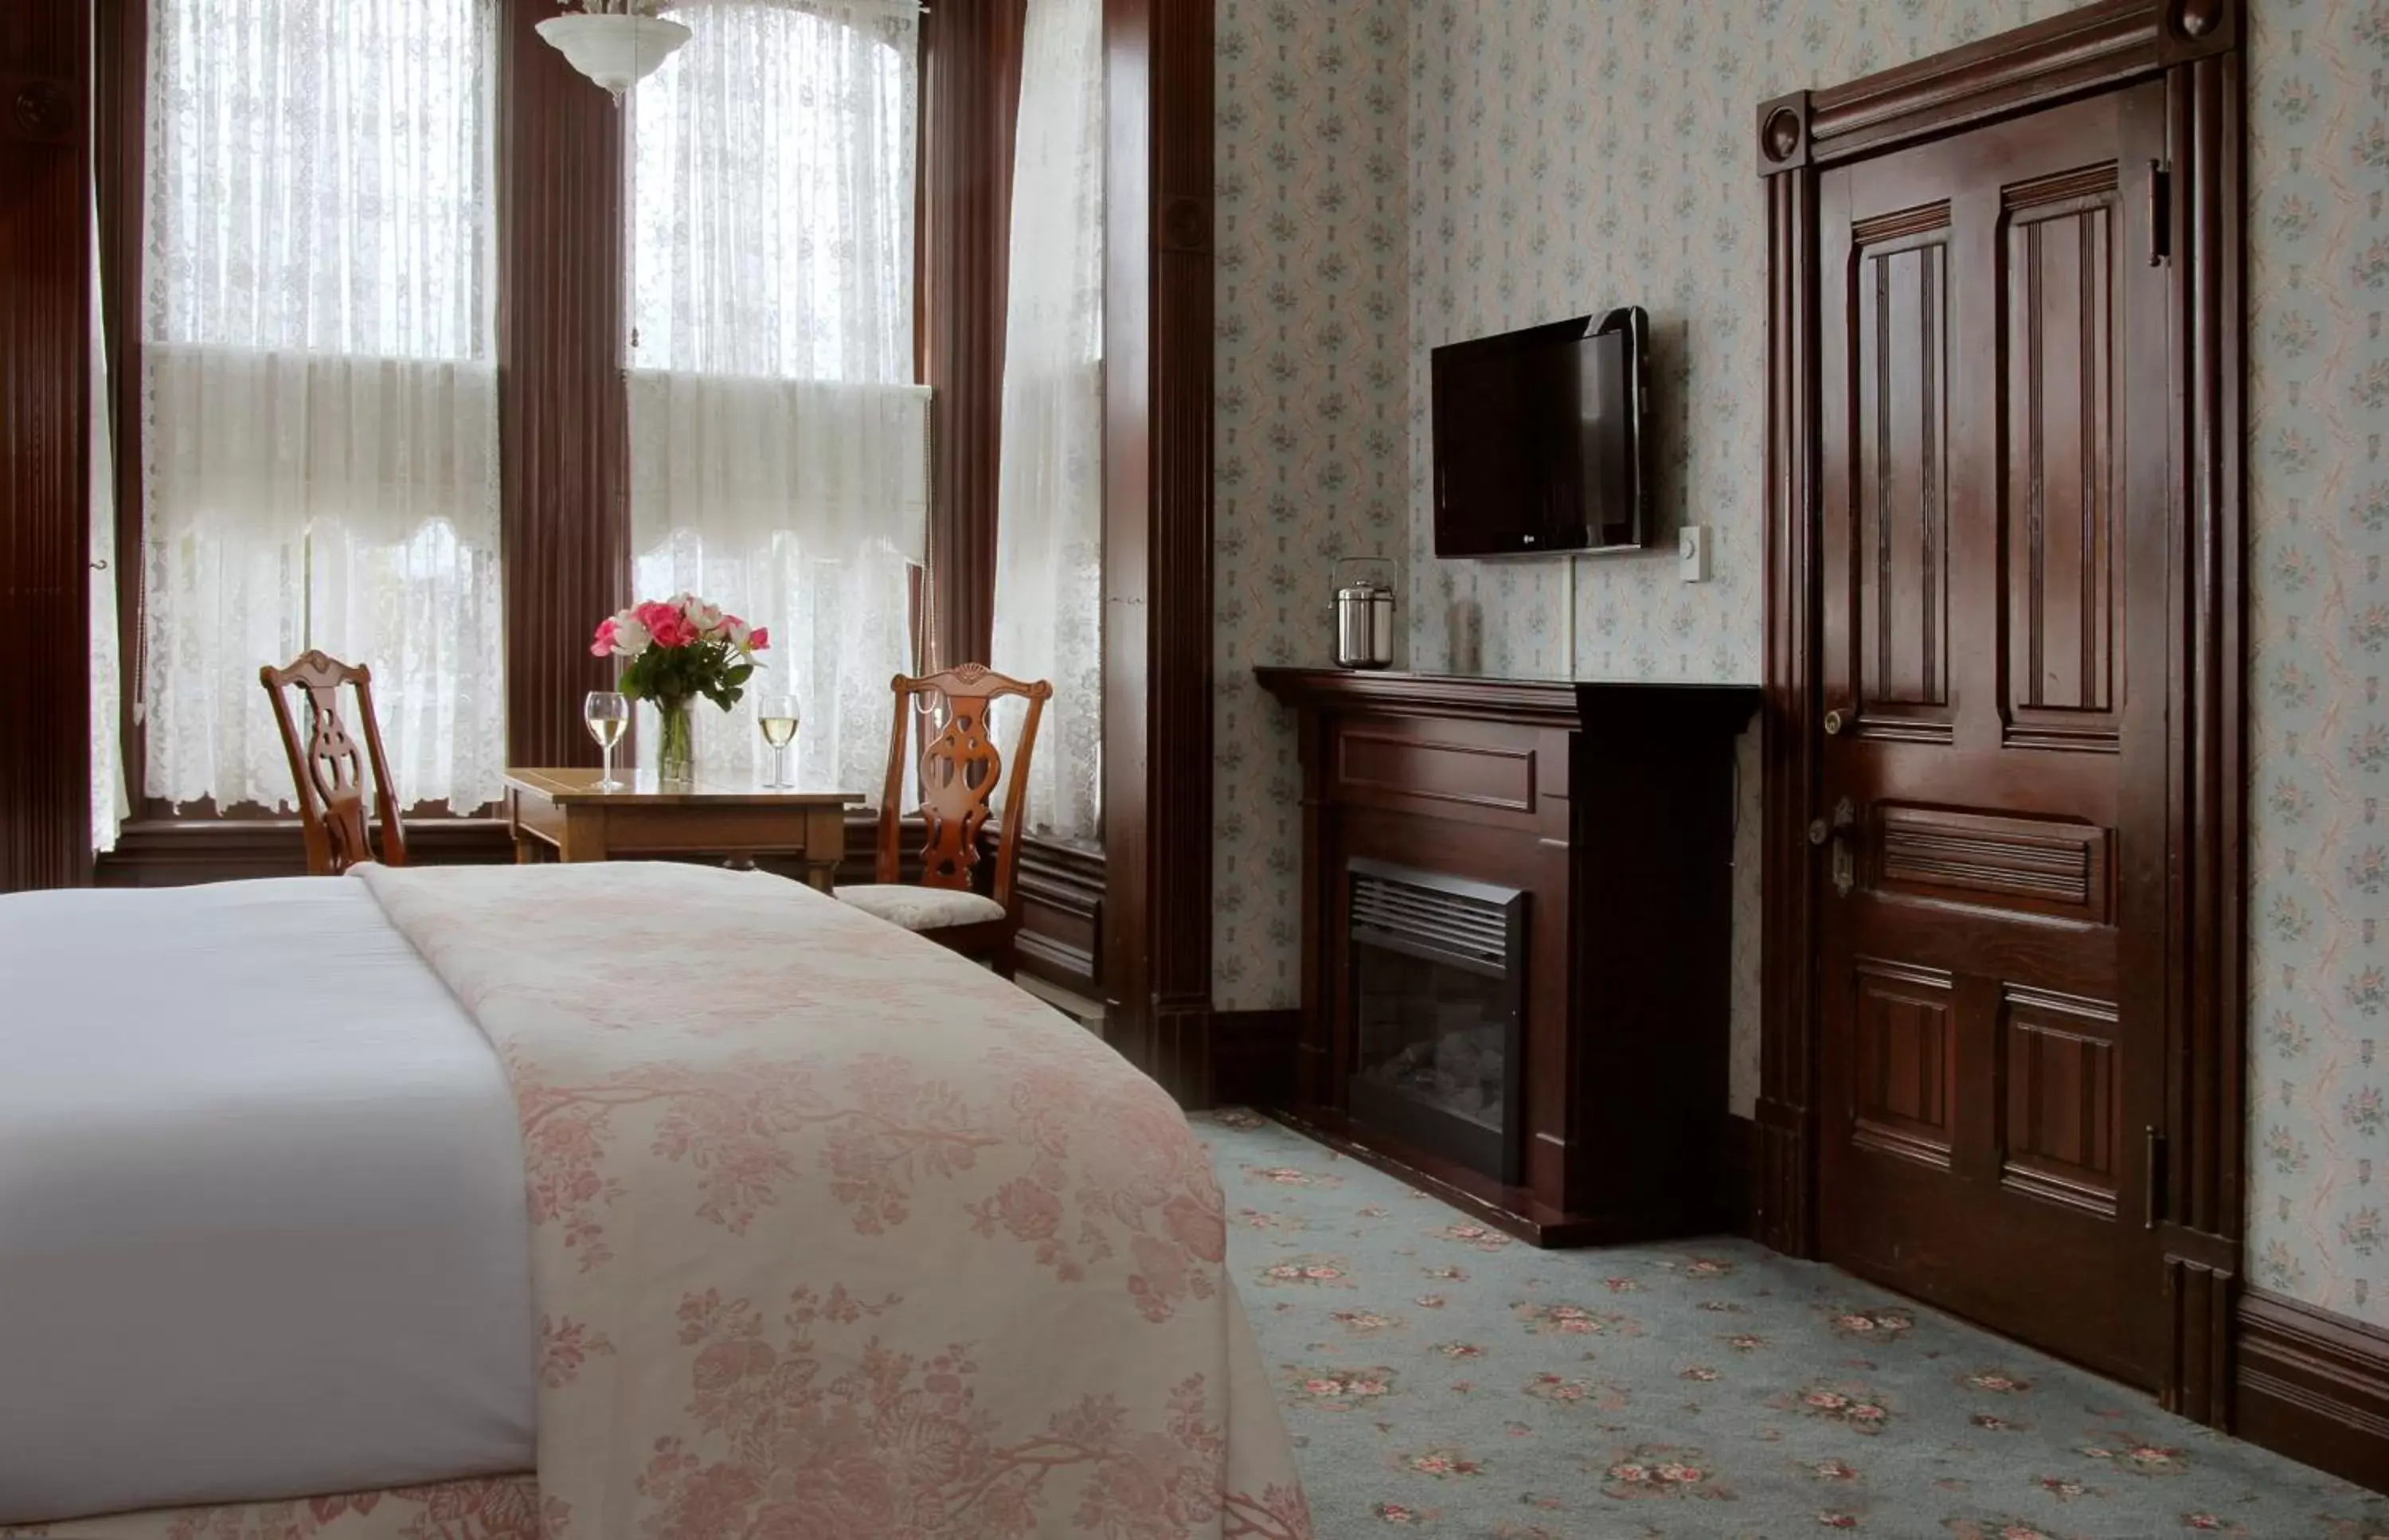 Decorative detail, Bed in Victorian Inn